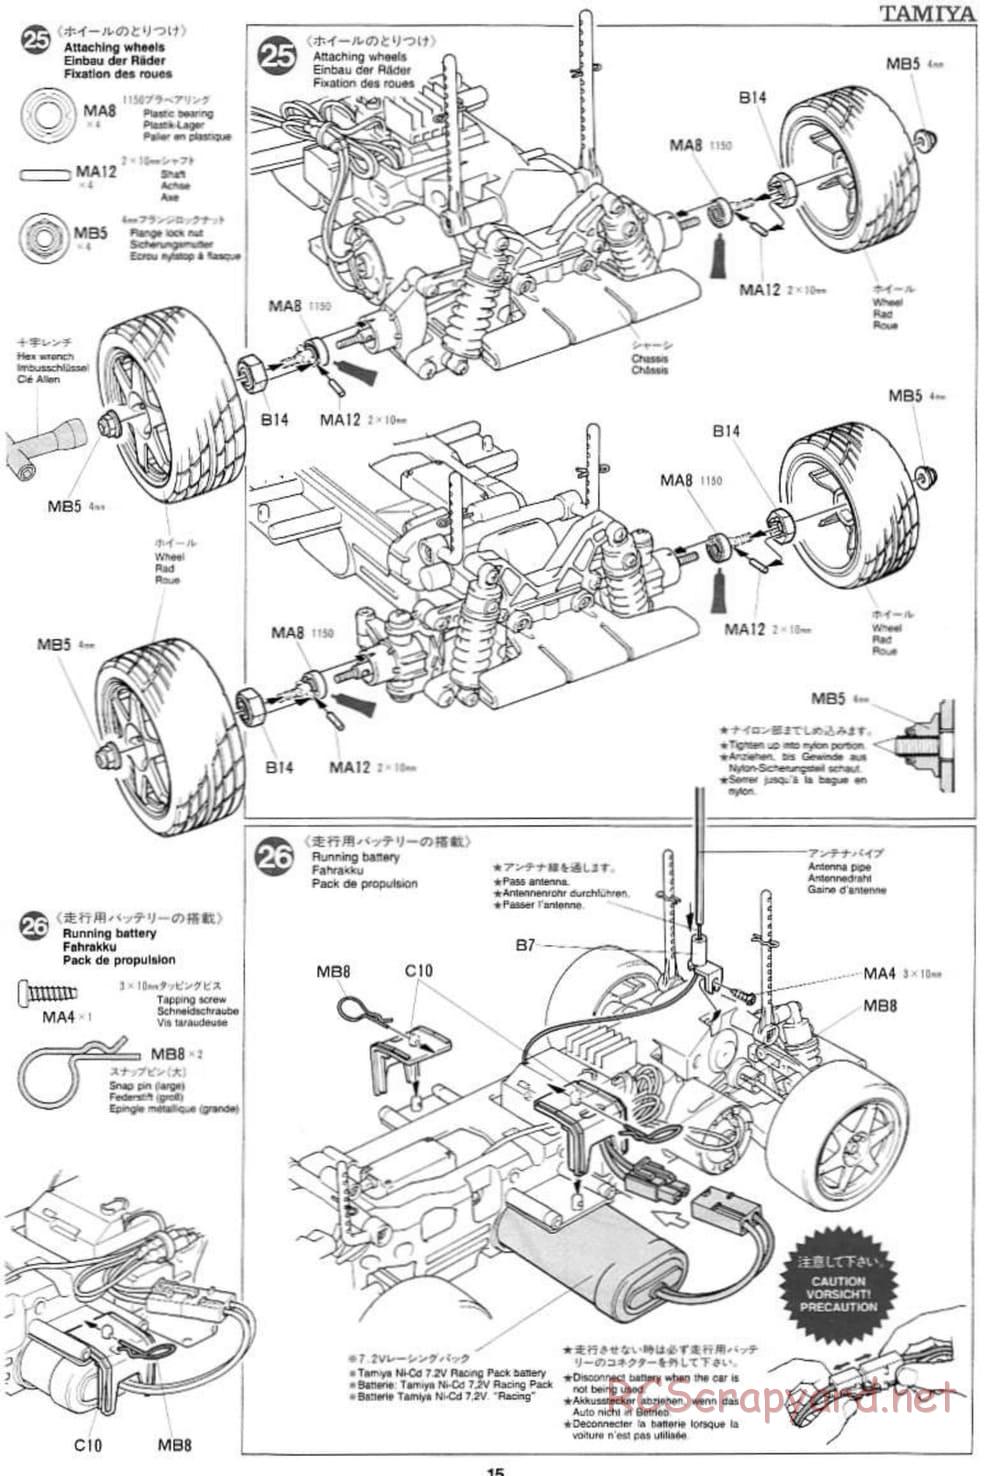 Tamiya - Subaru Impreza WRC - TL-01 Chassis - Manual - Page 15